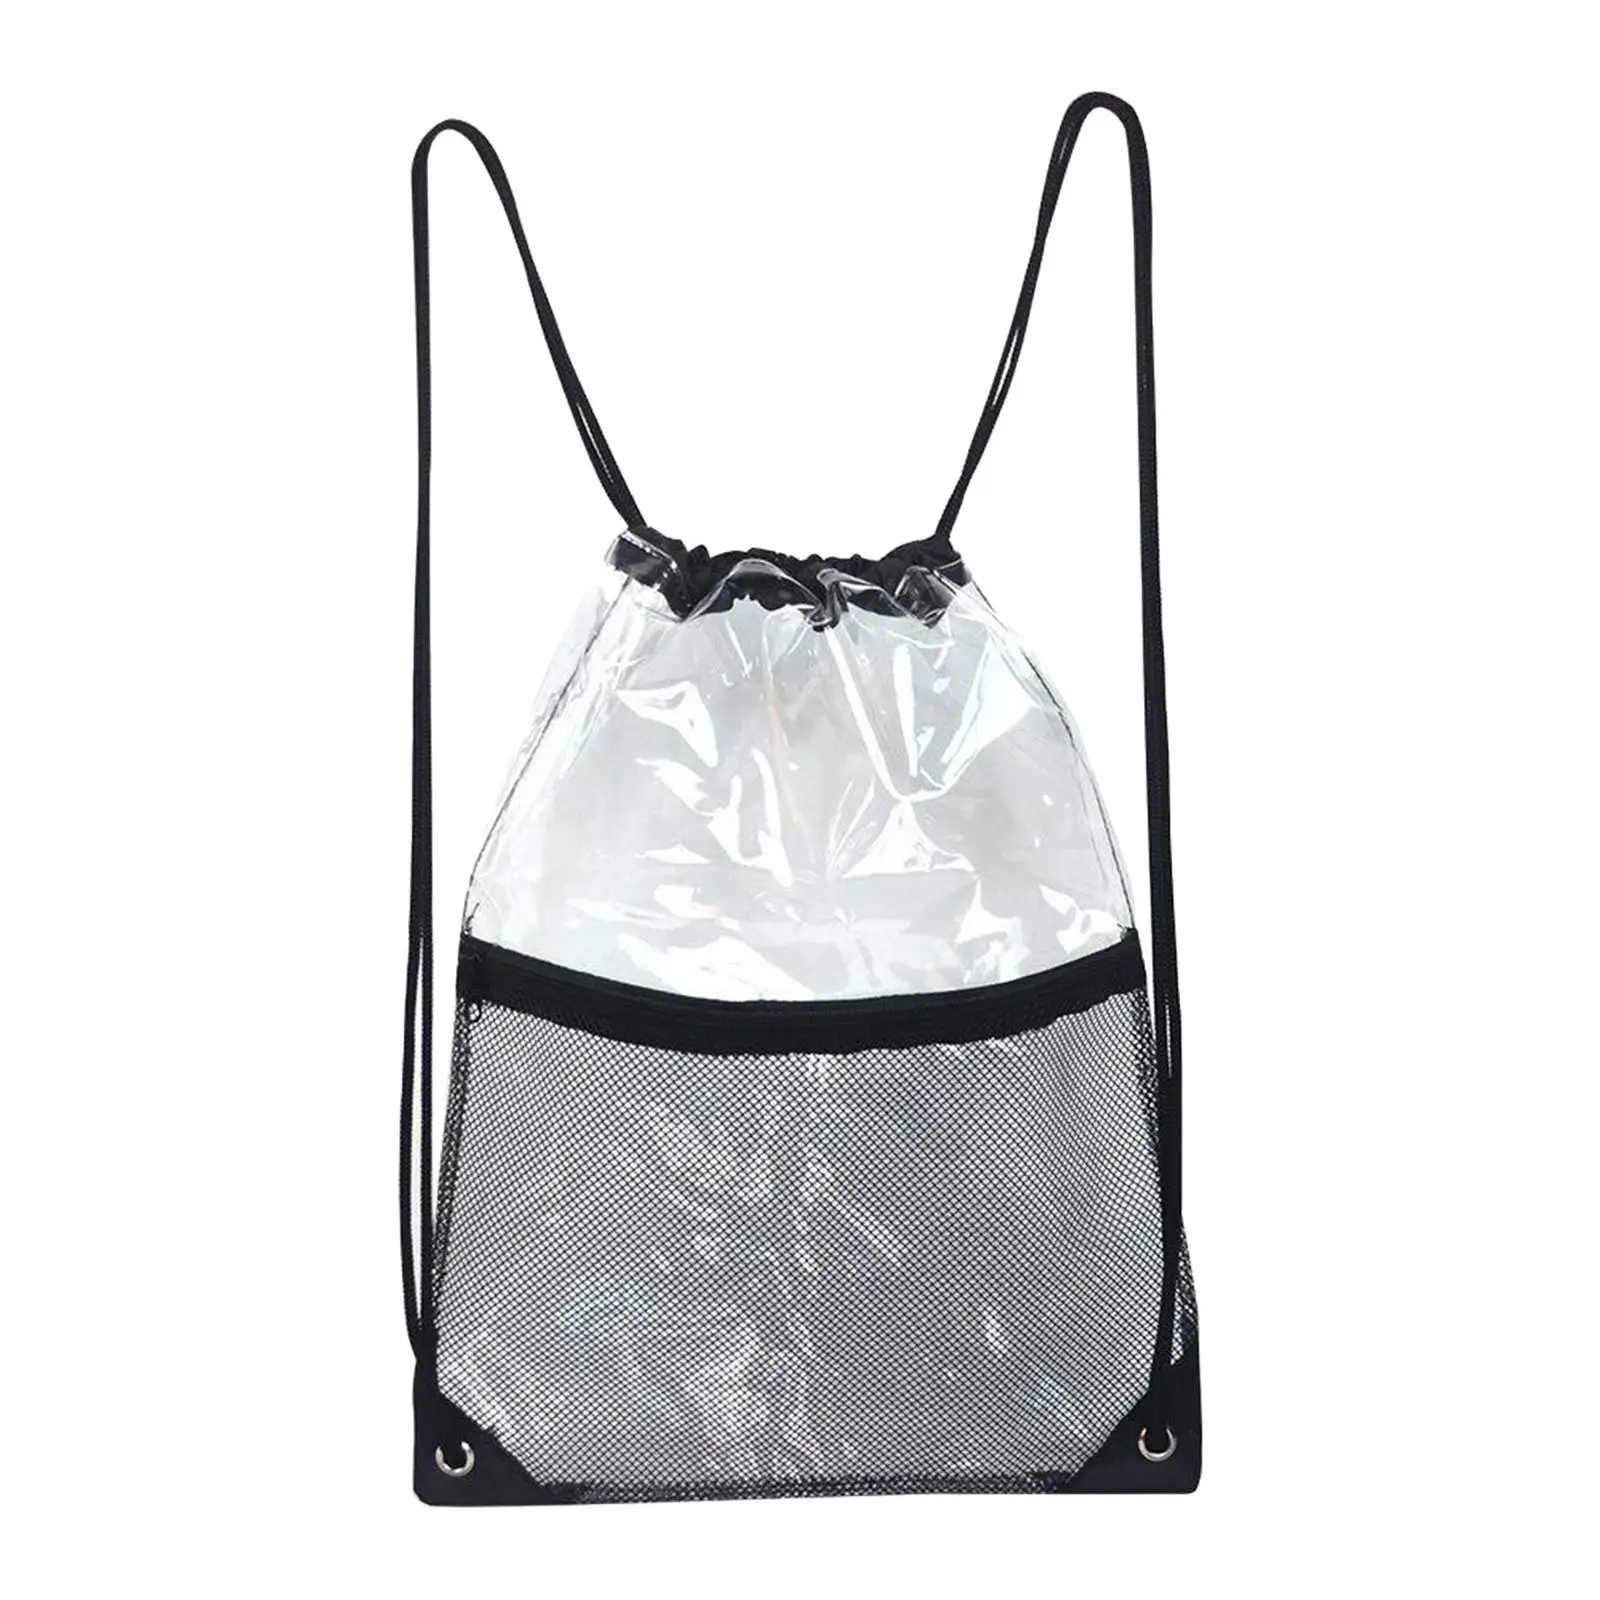 Clear Drawstring Backbag Clear Bag Storage Bag Waterproof Draw String Sport Bag Cinch Bags for sports Men Women Yoga Equipment